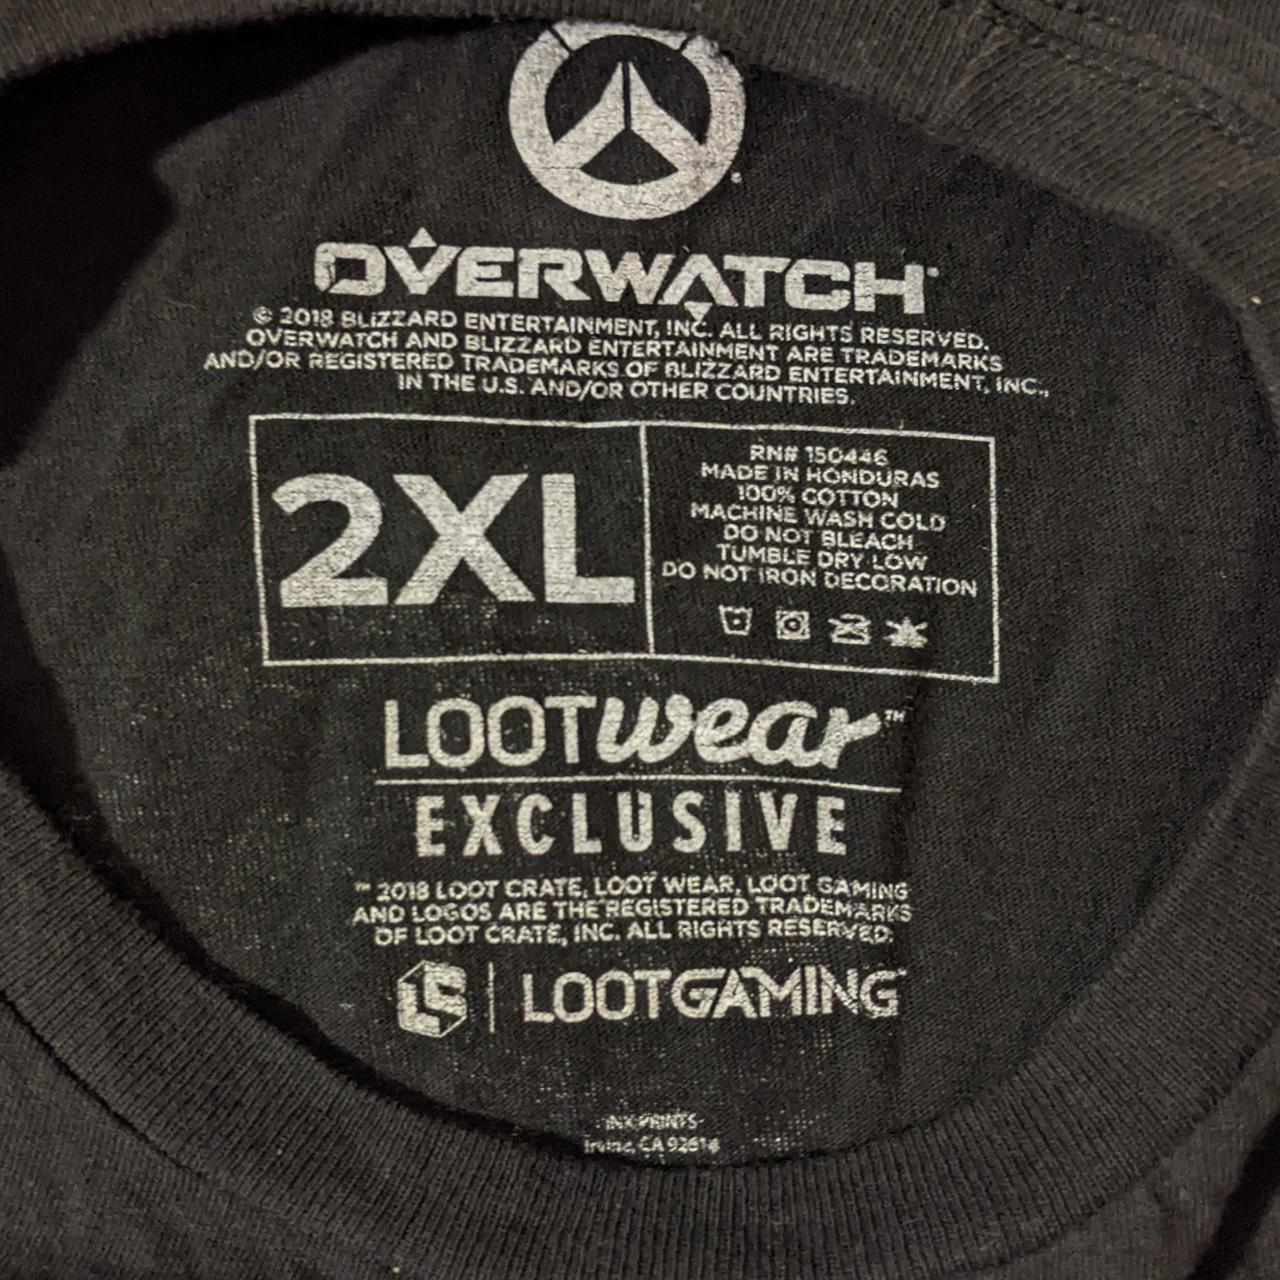 Product Image 3 - Overwatch Anniversary Black T-shirt

Size XXL
Lootwear